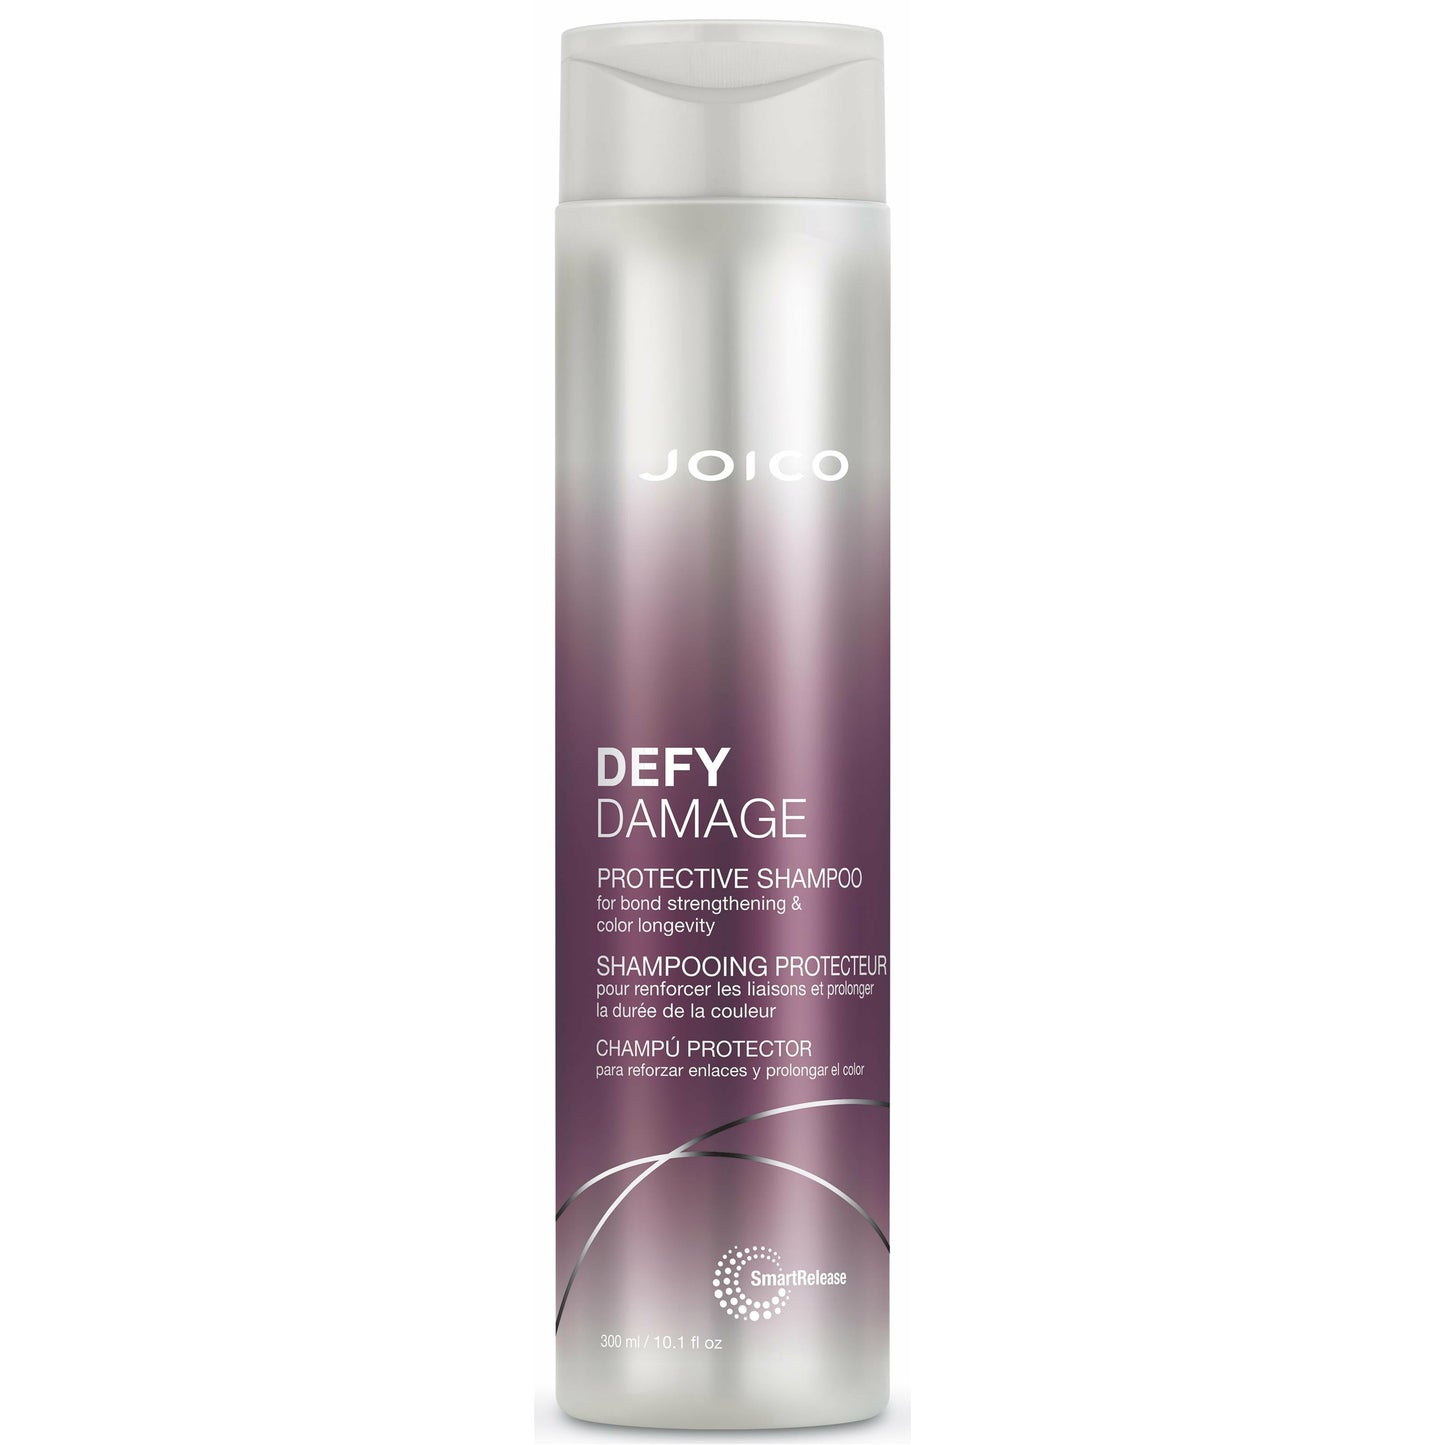 Joico Defy Damage Protective Shampoo, 10.1oz